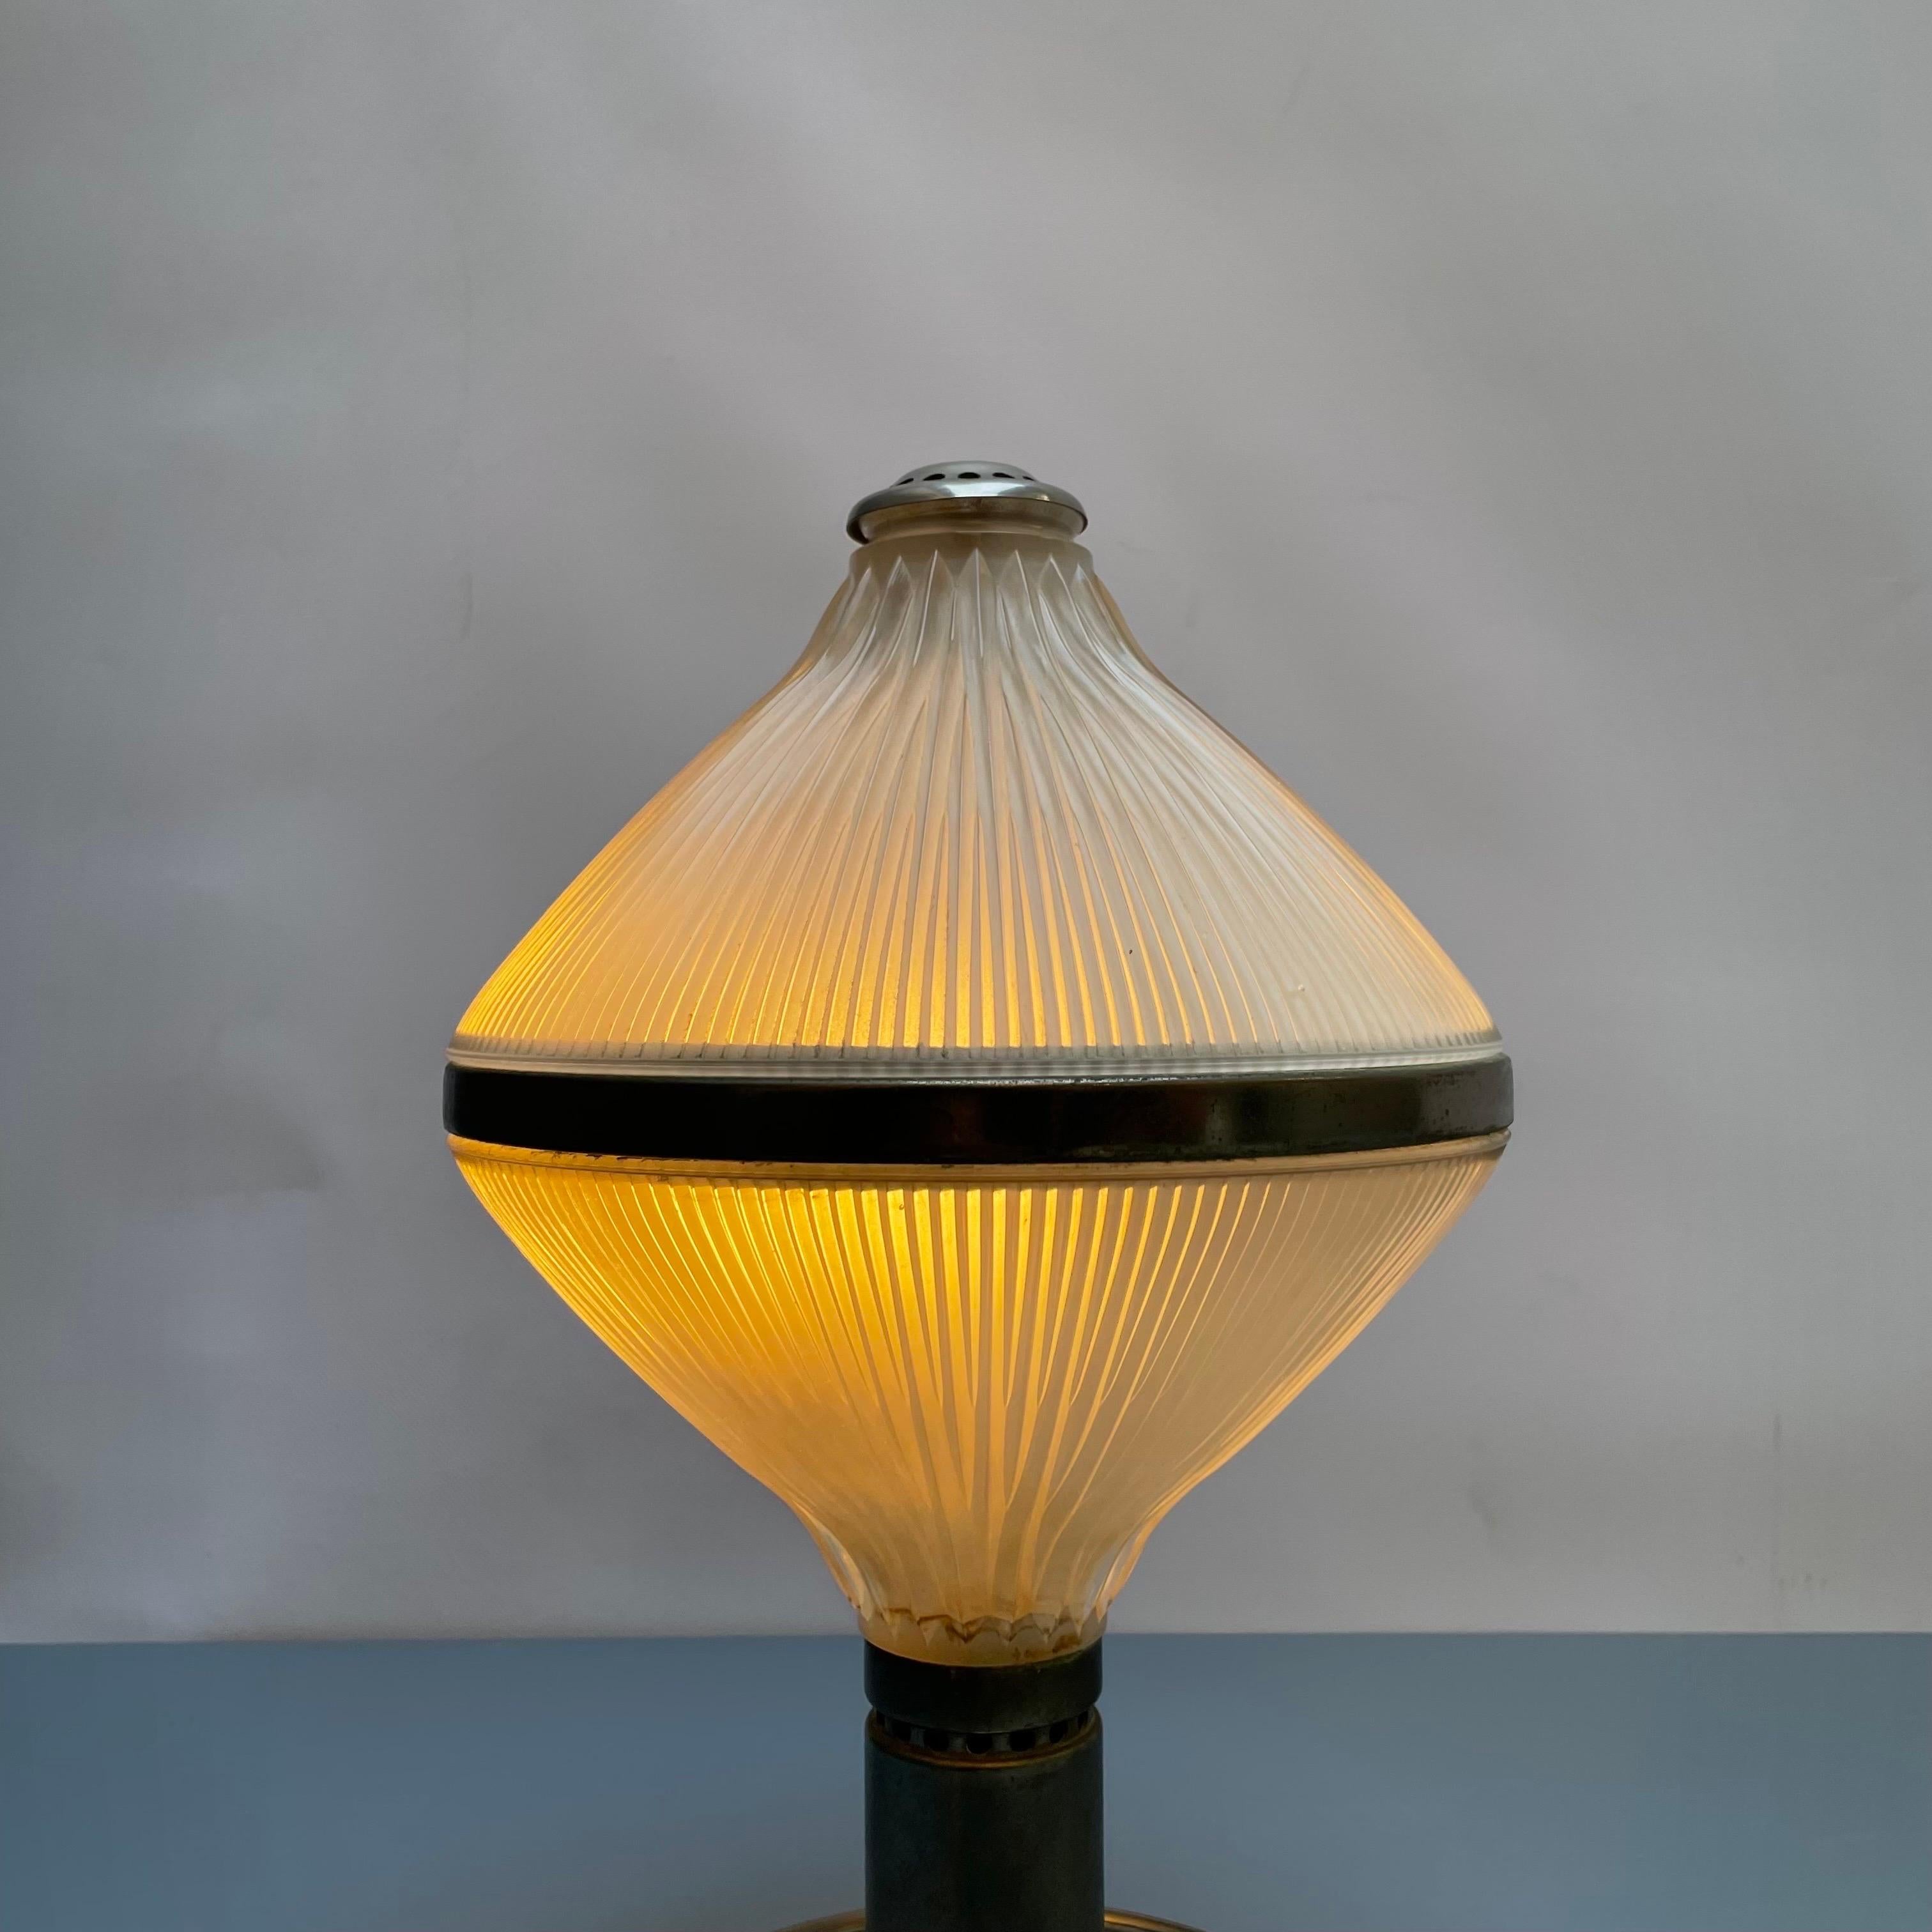 Metal Polinnia Lamp by Studio BBPR